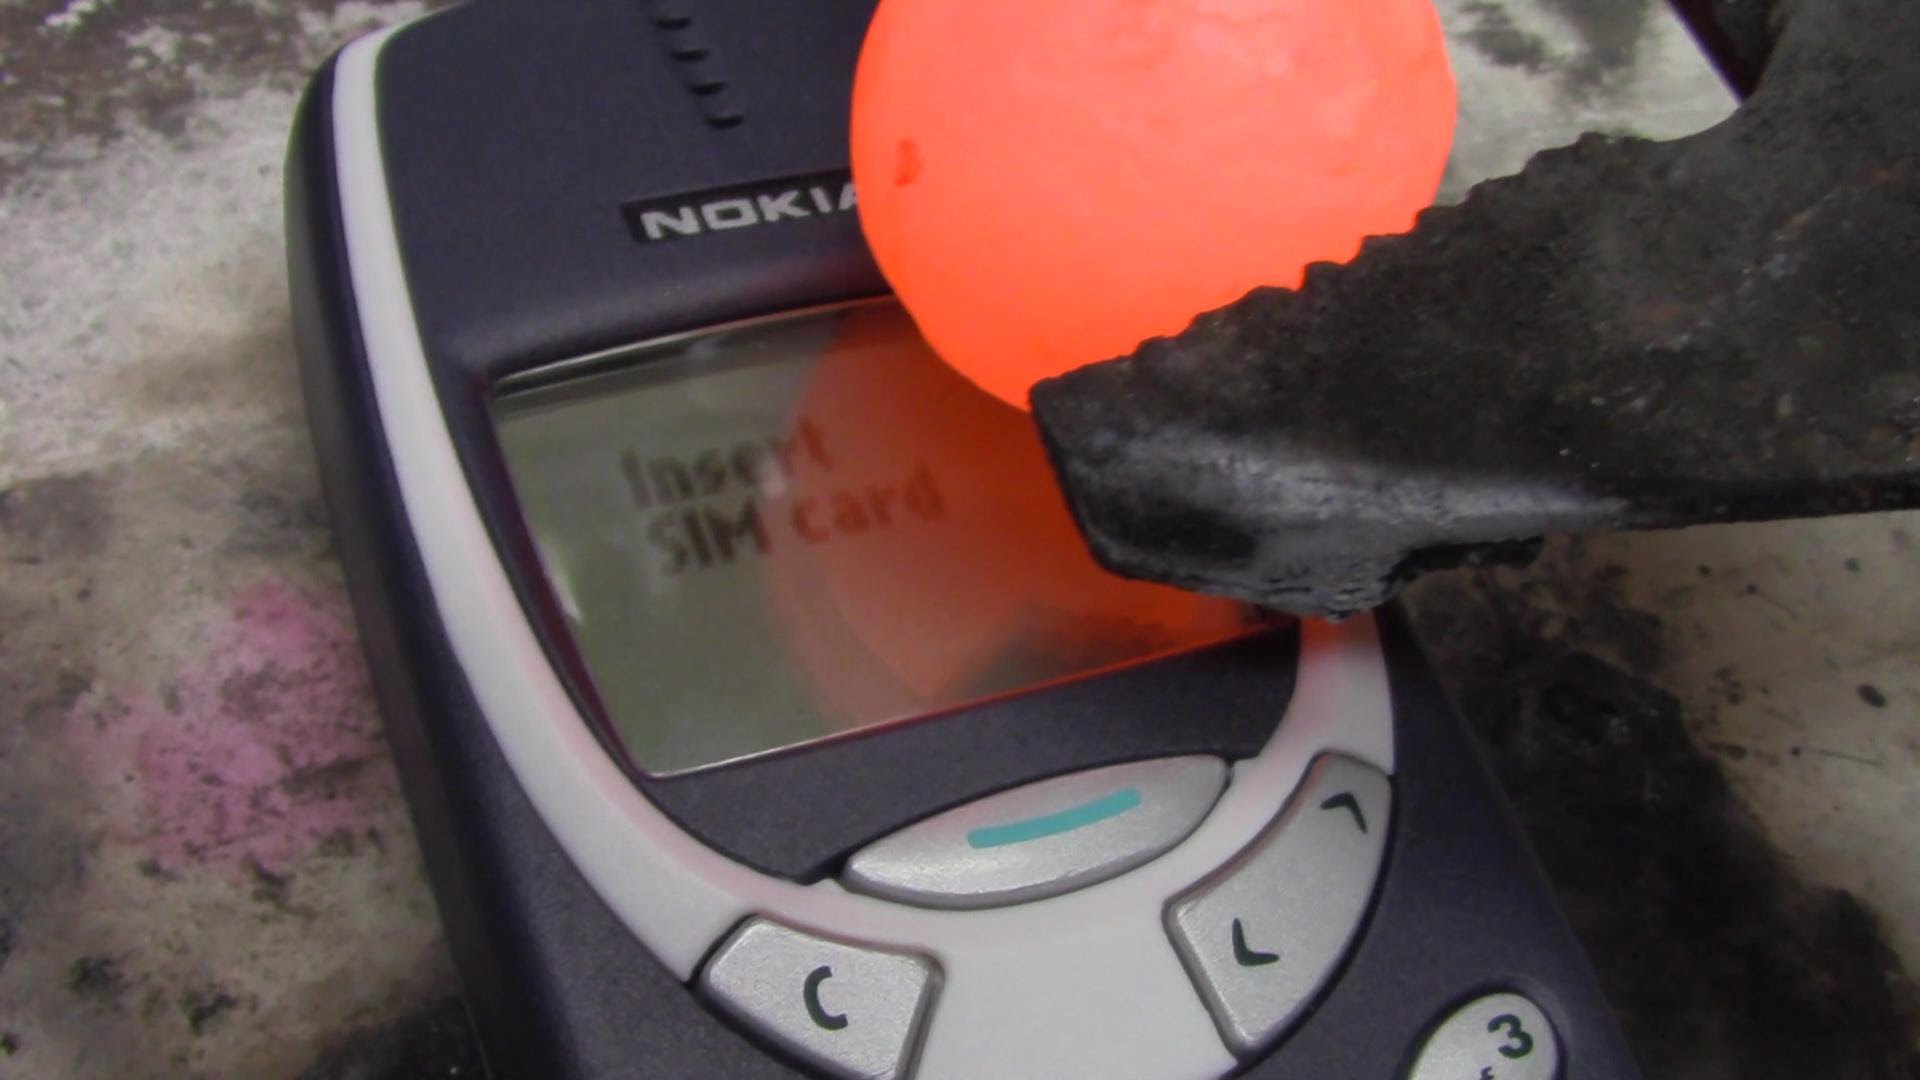 A red hot nickel ball VS Nokia 3310